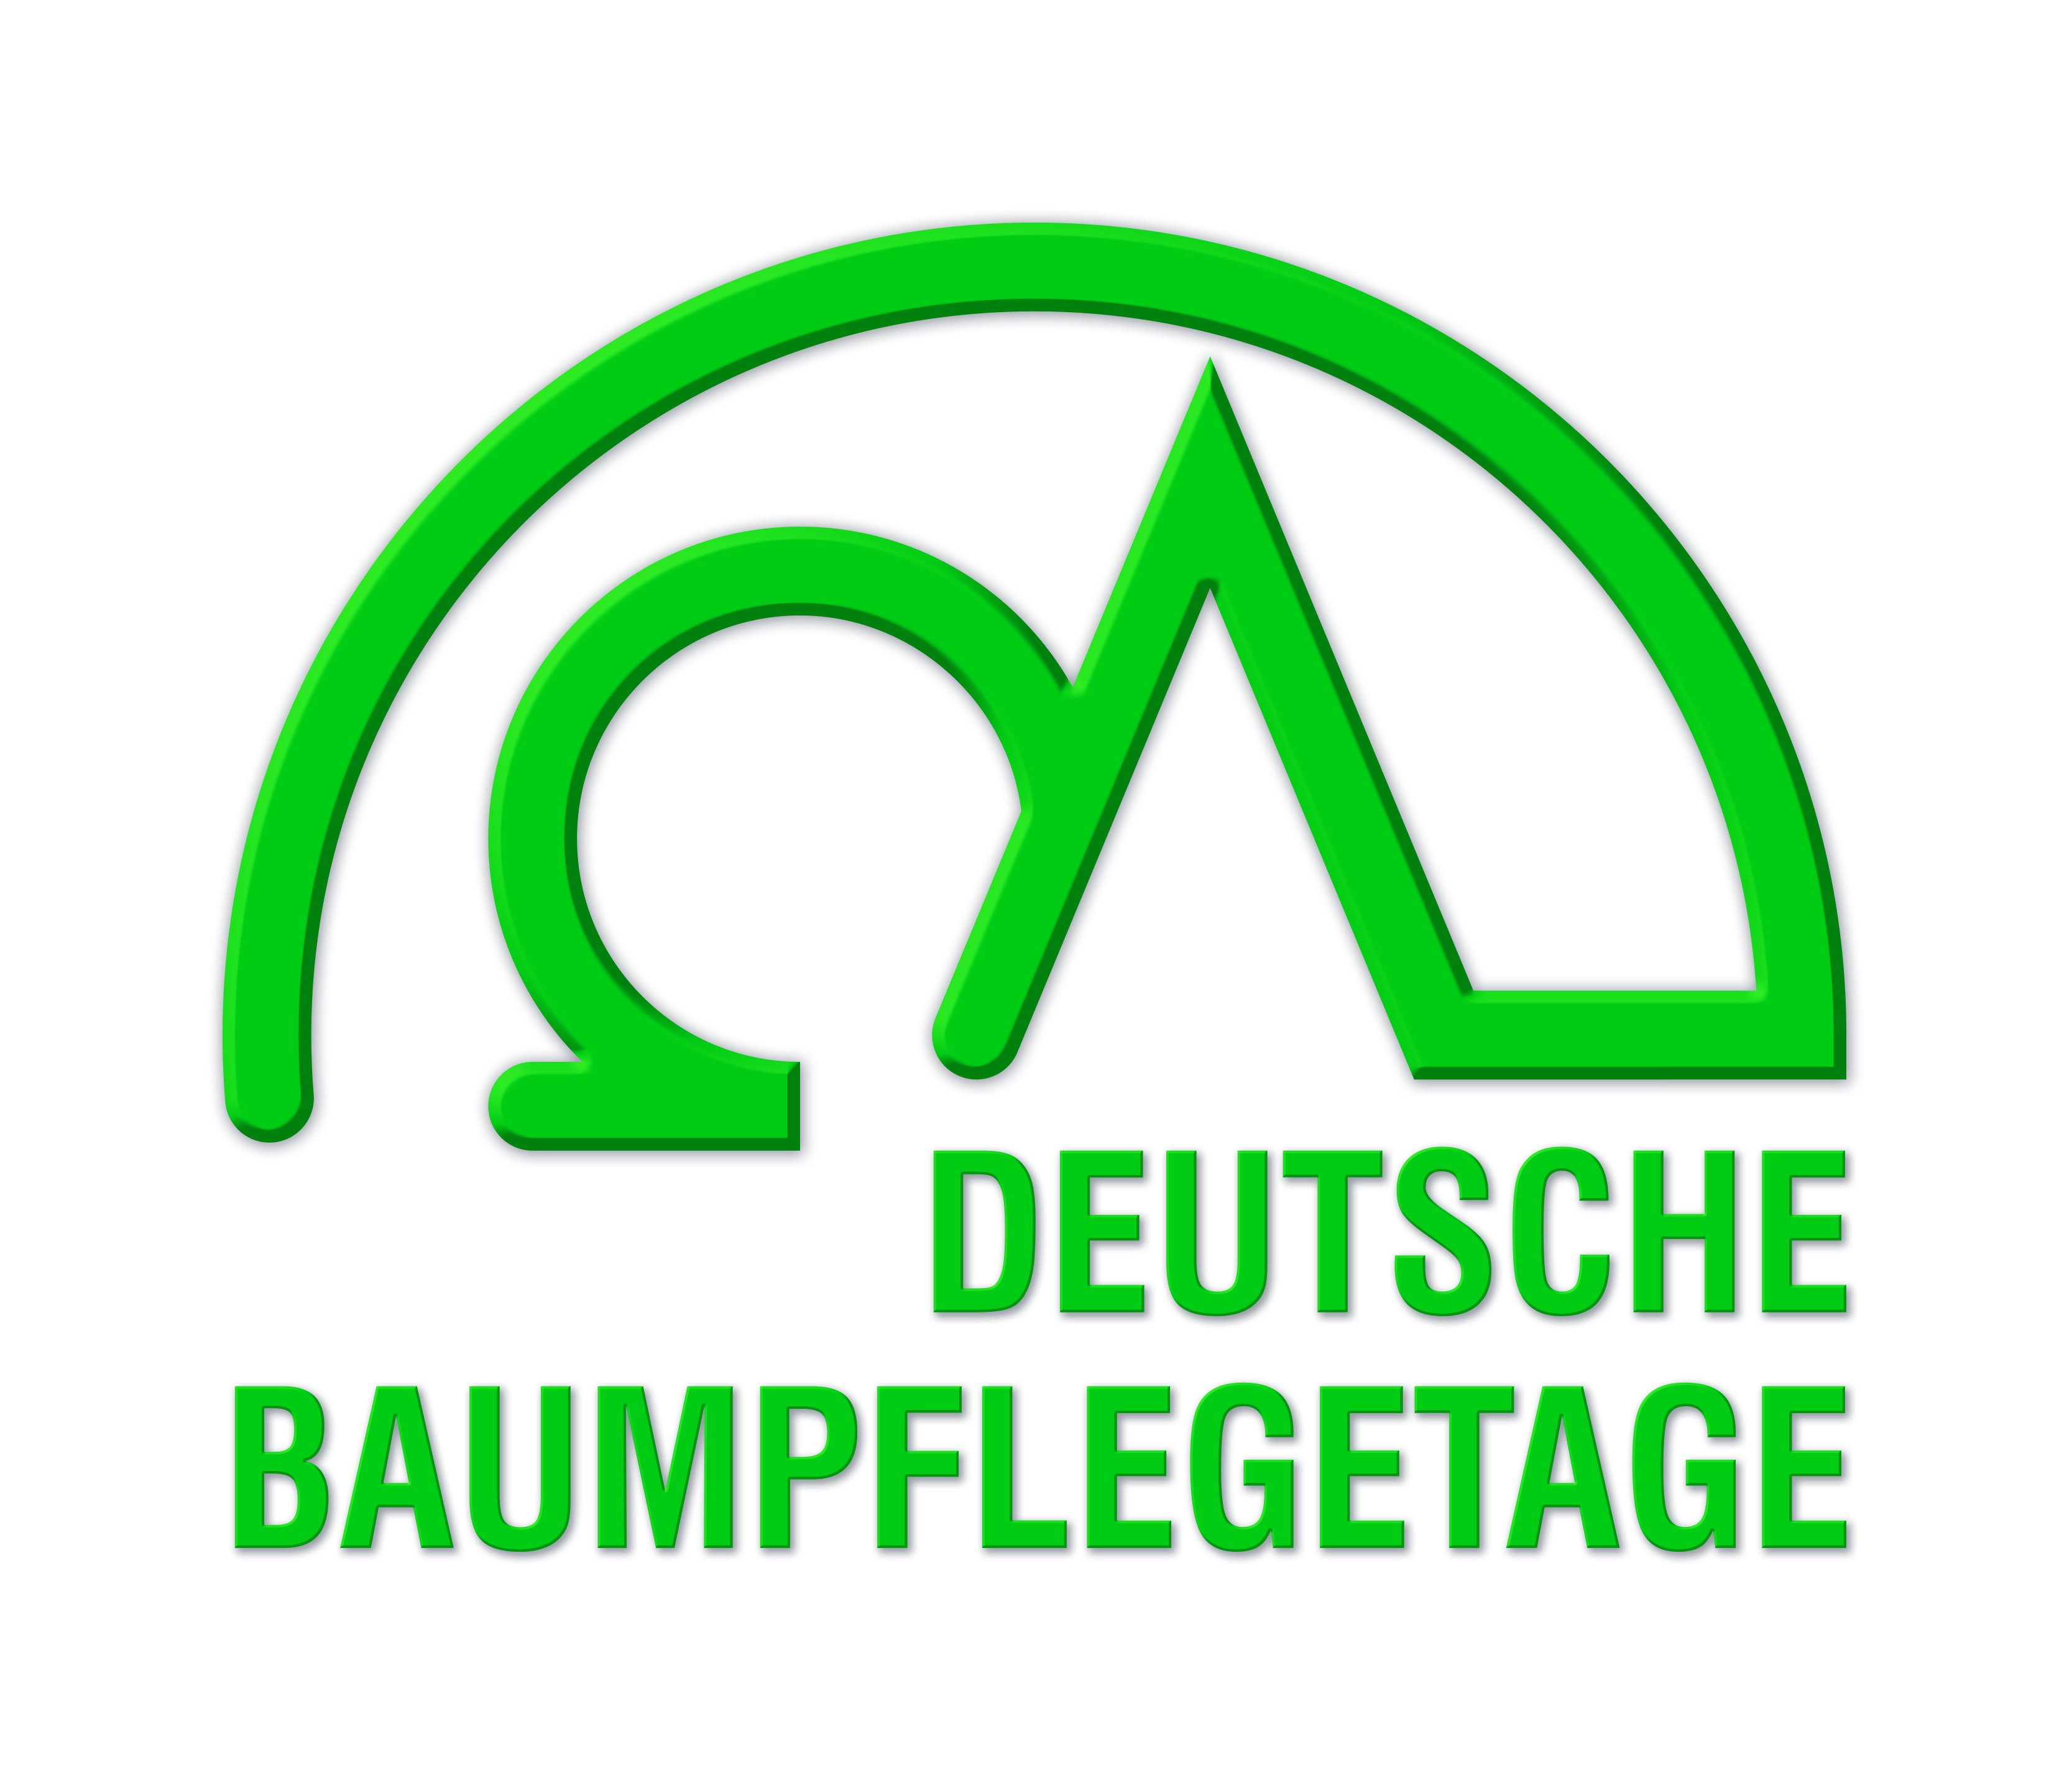 Ci vediamo ai Deutsche Baumpflegetage dal 24 al 26 d’aprile 2018!